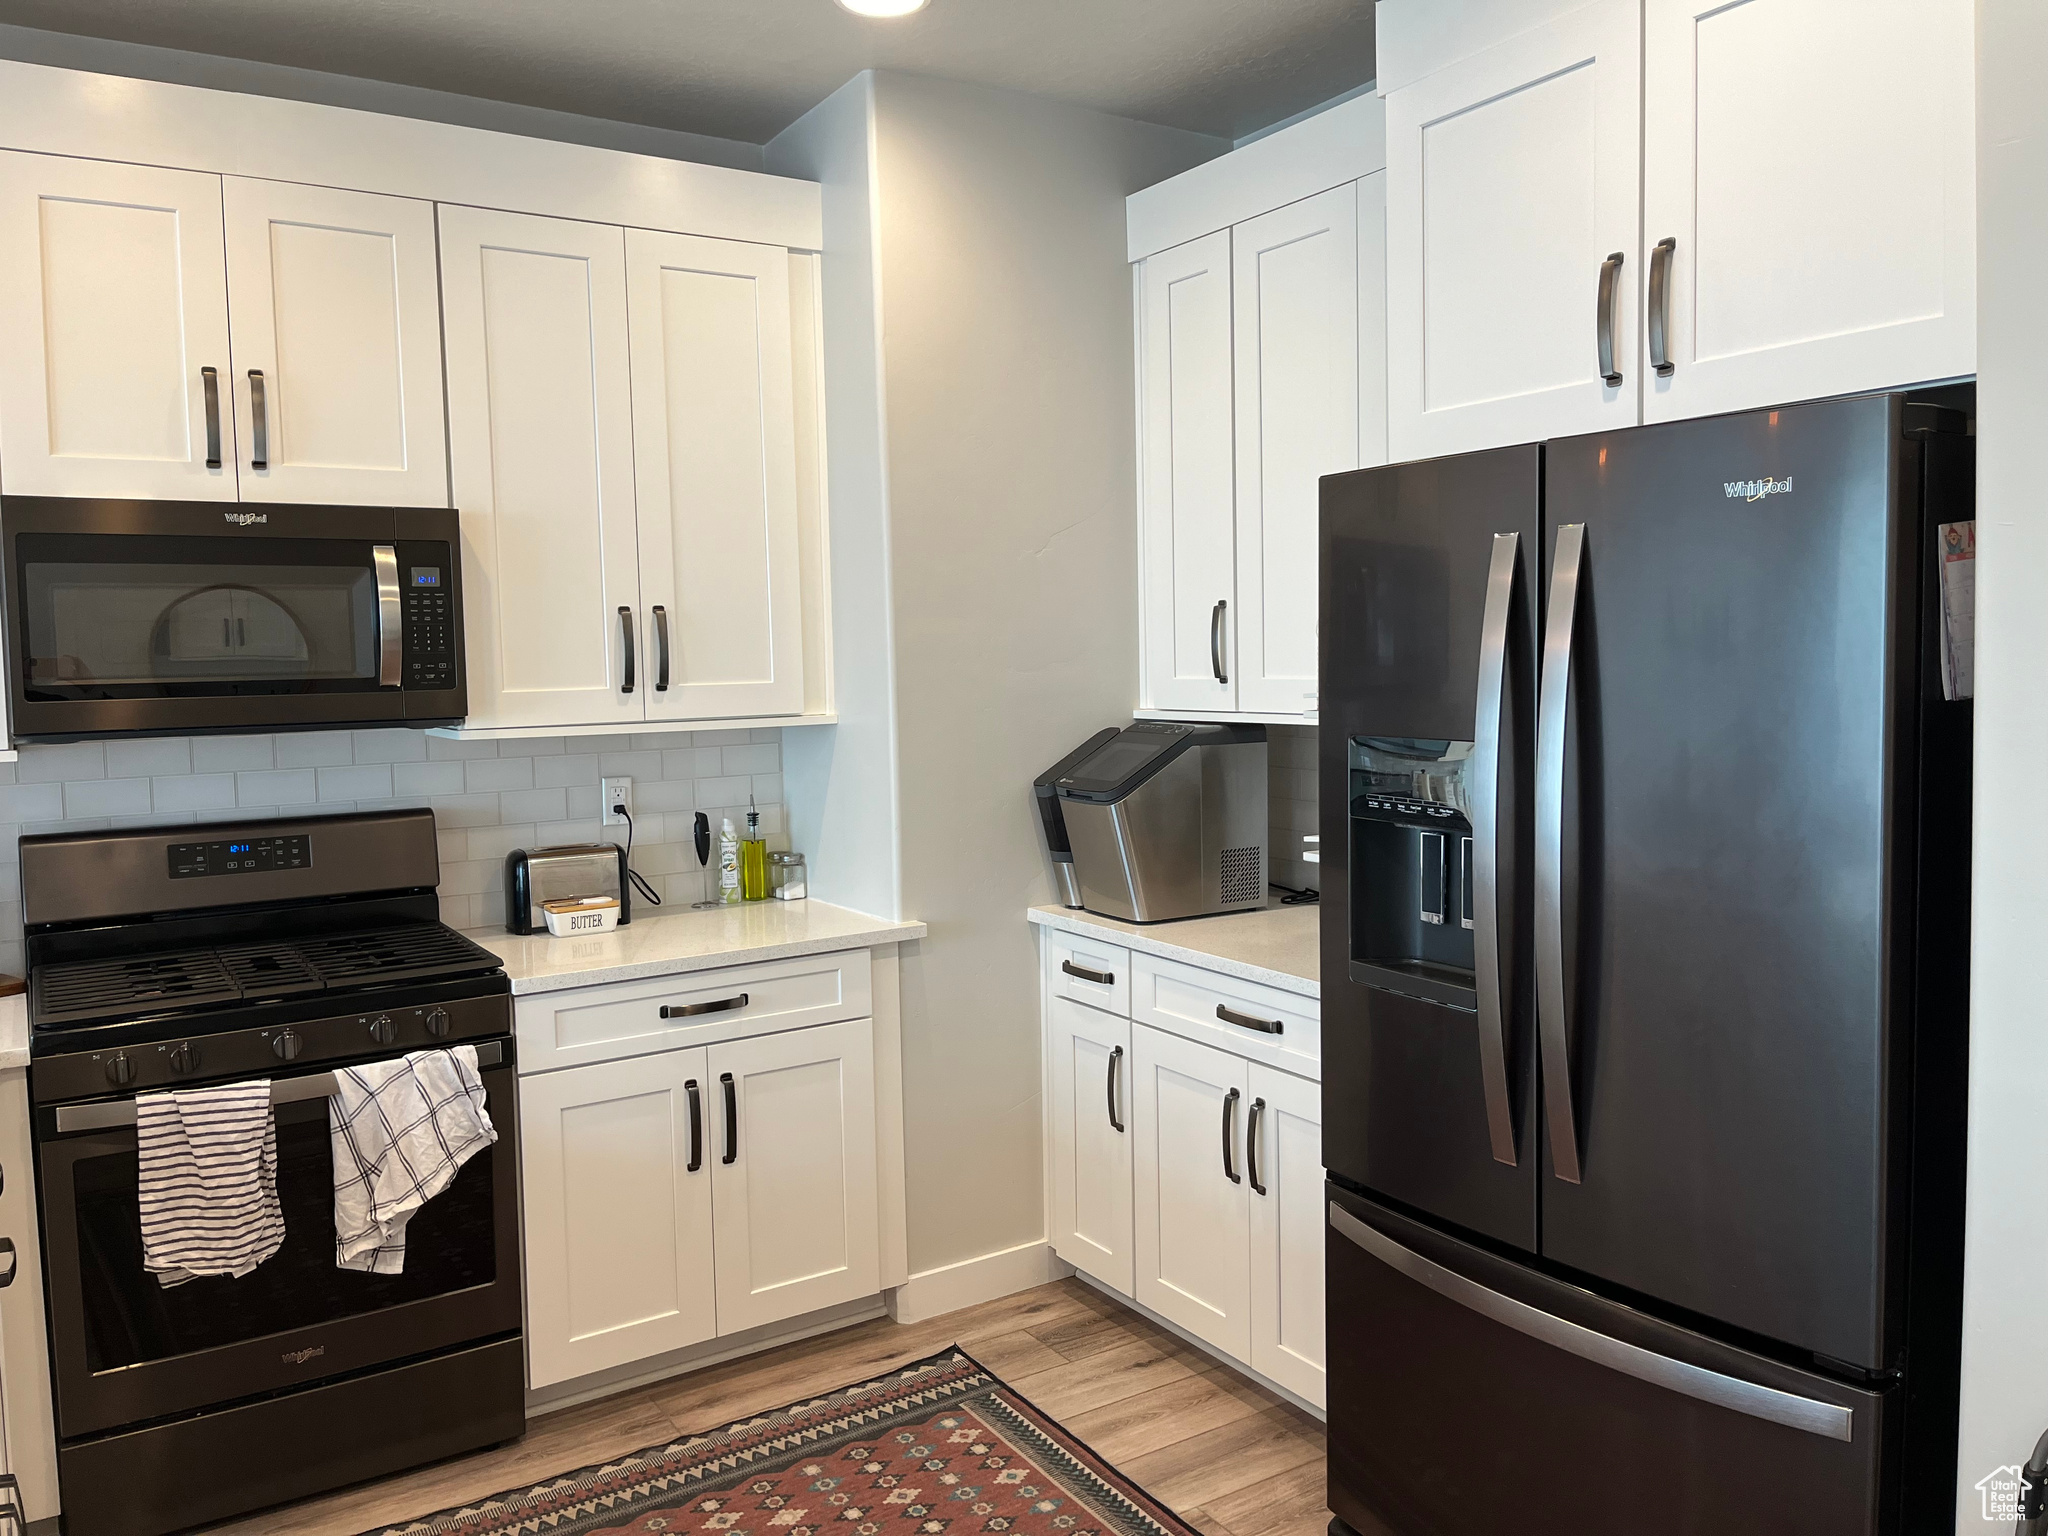 Kitchen featuring backsplash, stainless steel appliances, light hardwood / wood-style floors, and white cabinets